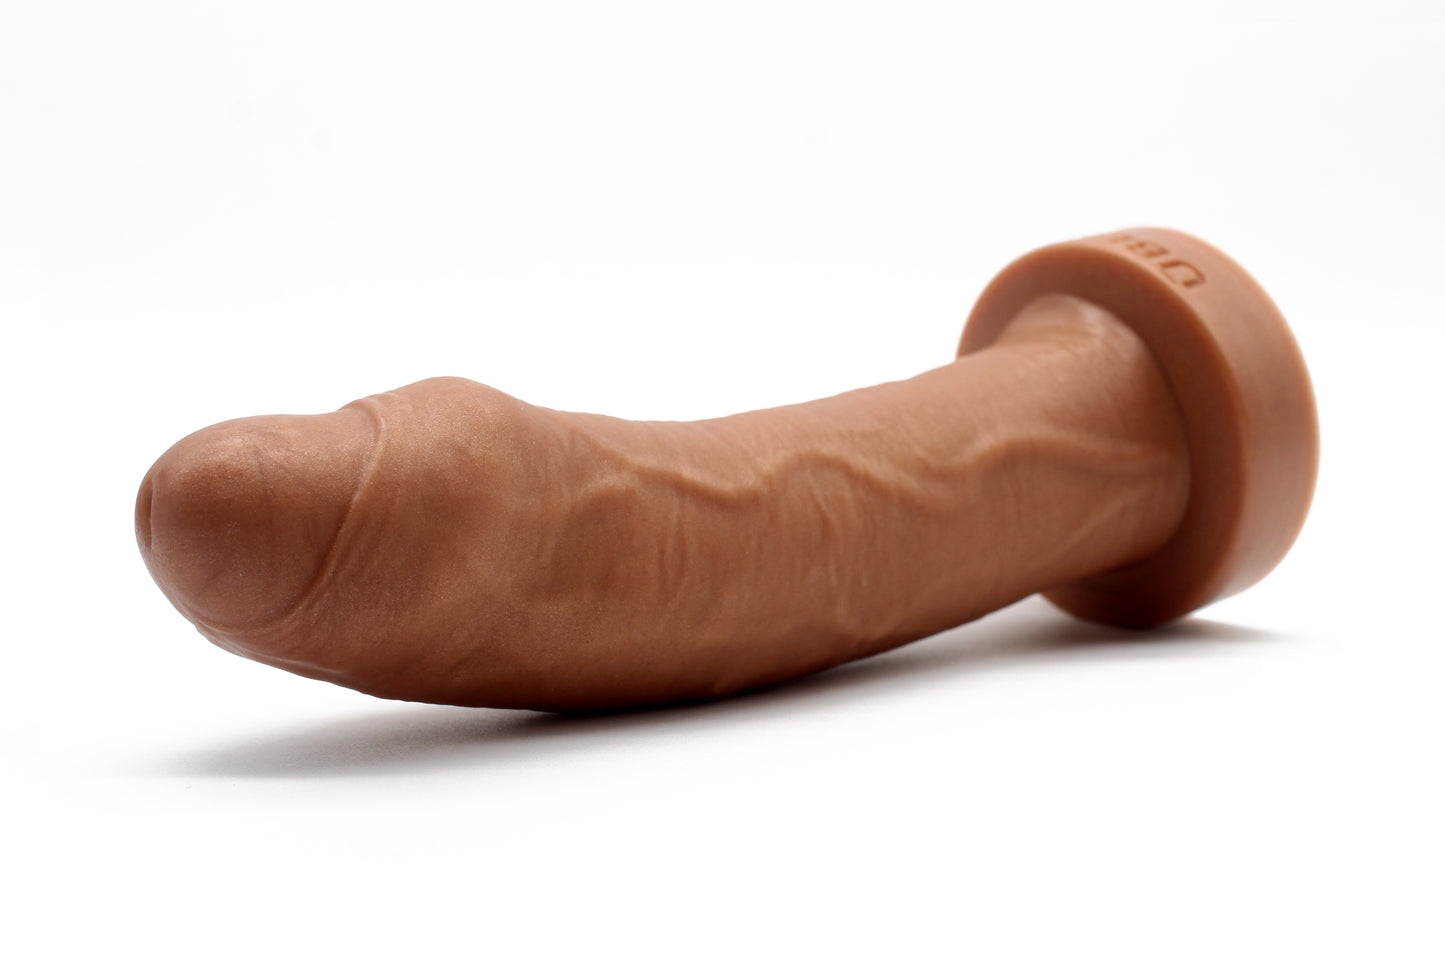 The Reservo Uncircumcised Dildo - Average Size